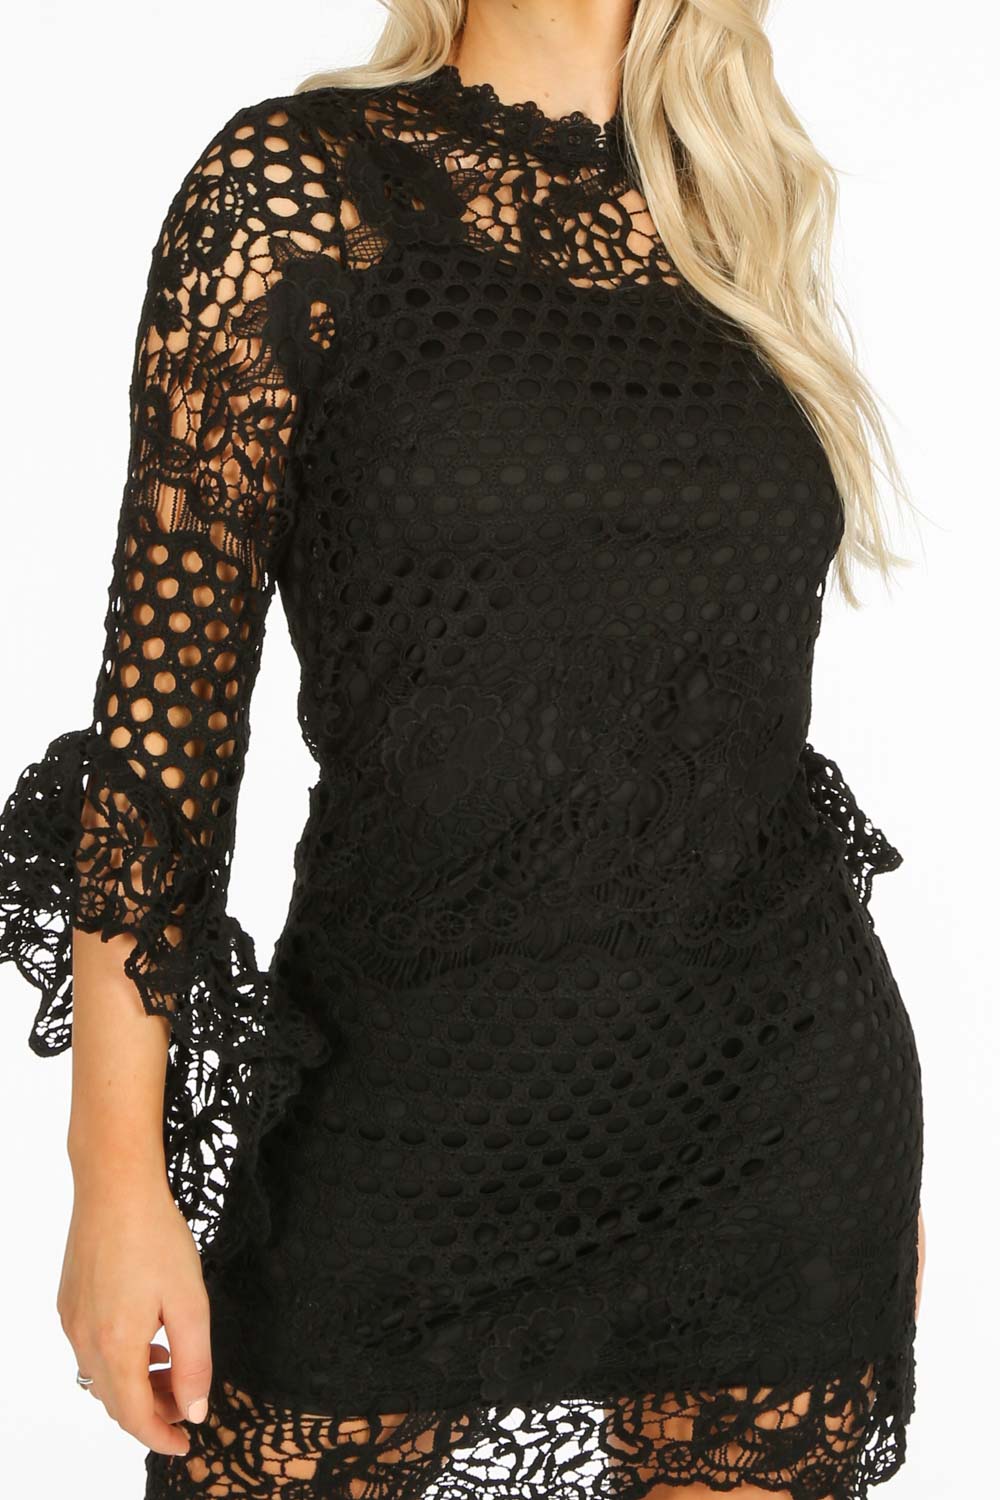 Black Frill Sleeve Crochet Dress With Slip Underlay